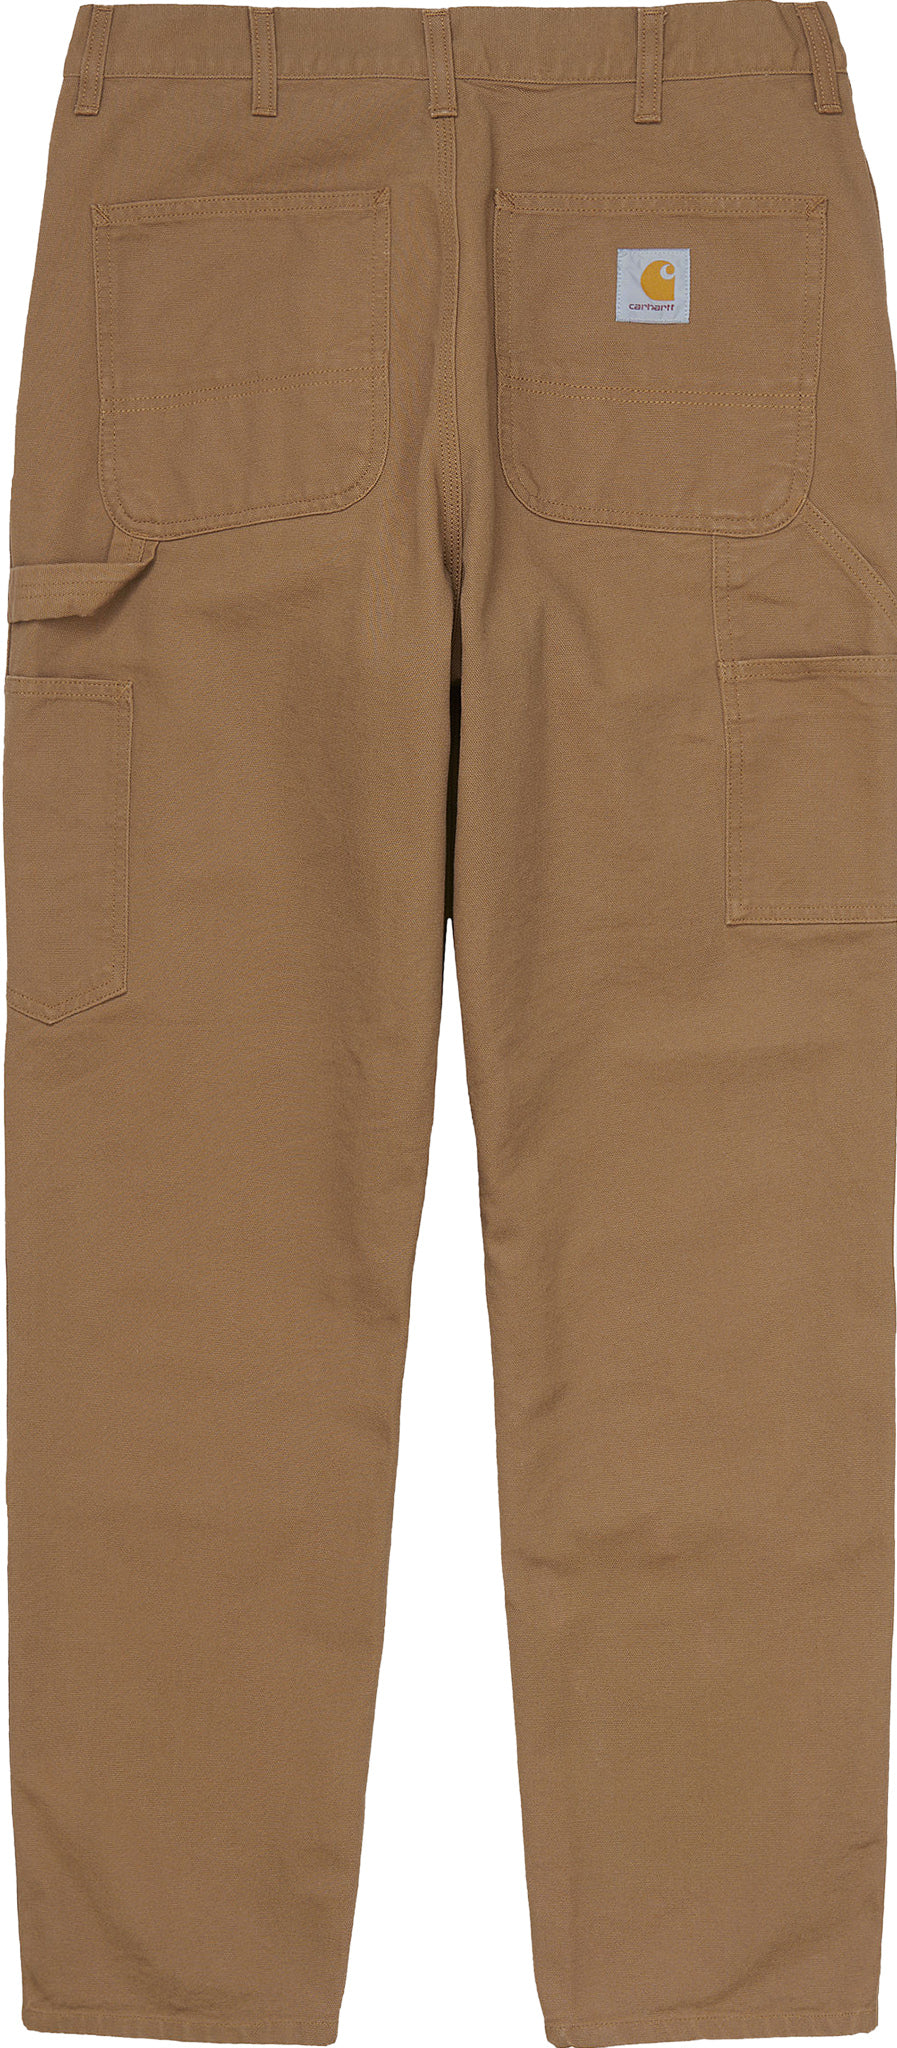 double knee pant man deep brown in cotton - CARHARTT WIP - d — 2